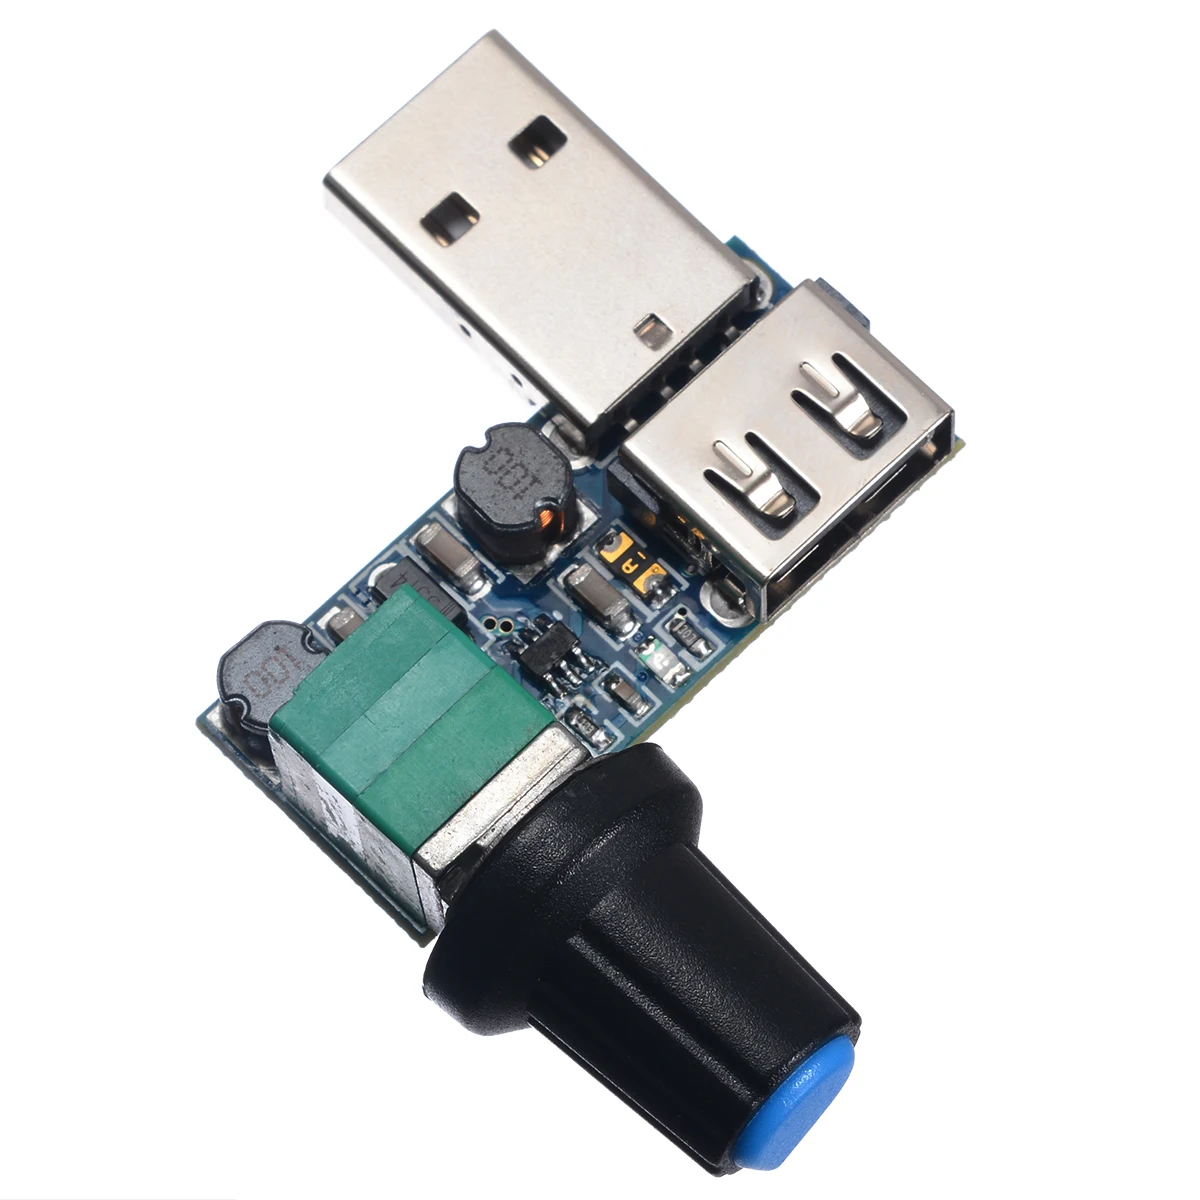 5 В до 12 В USB переключатель регулятора скорости вентилятора Mayitr бесступенчатый регулятор скорости модуль регулятора скорости